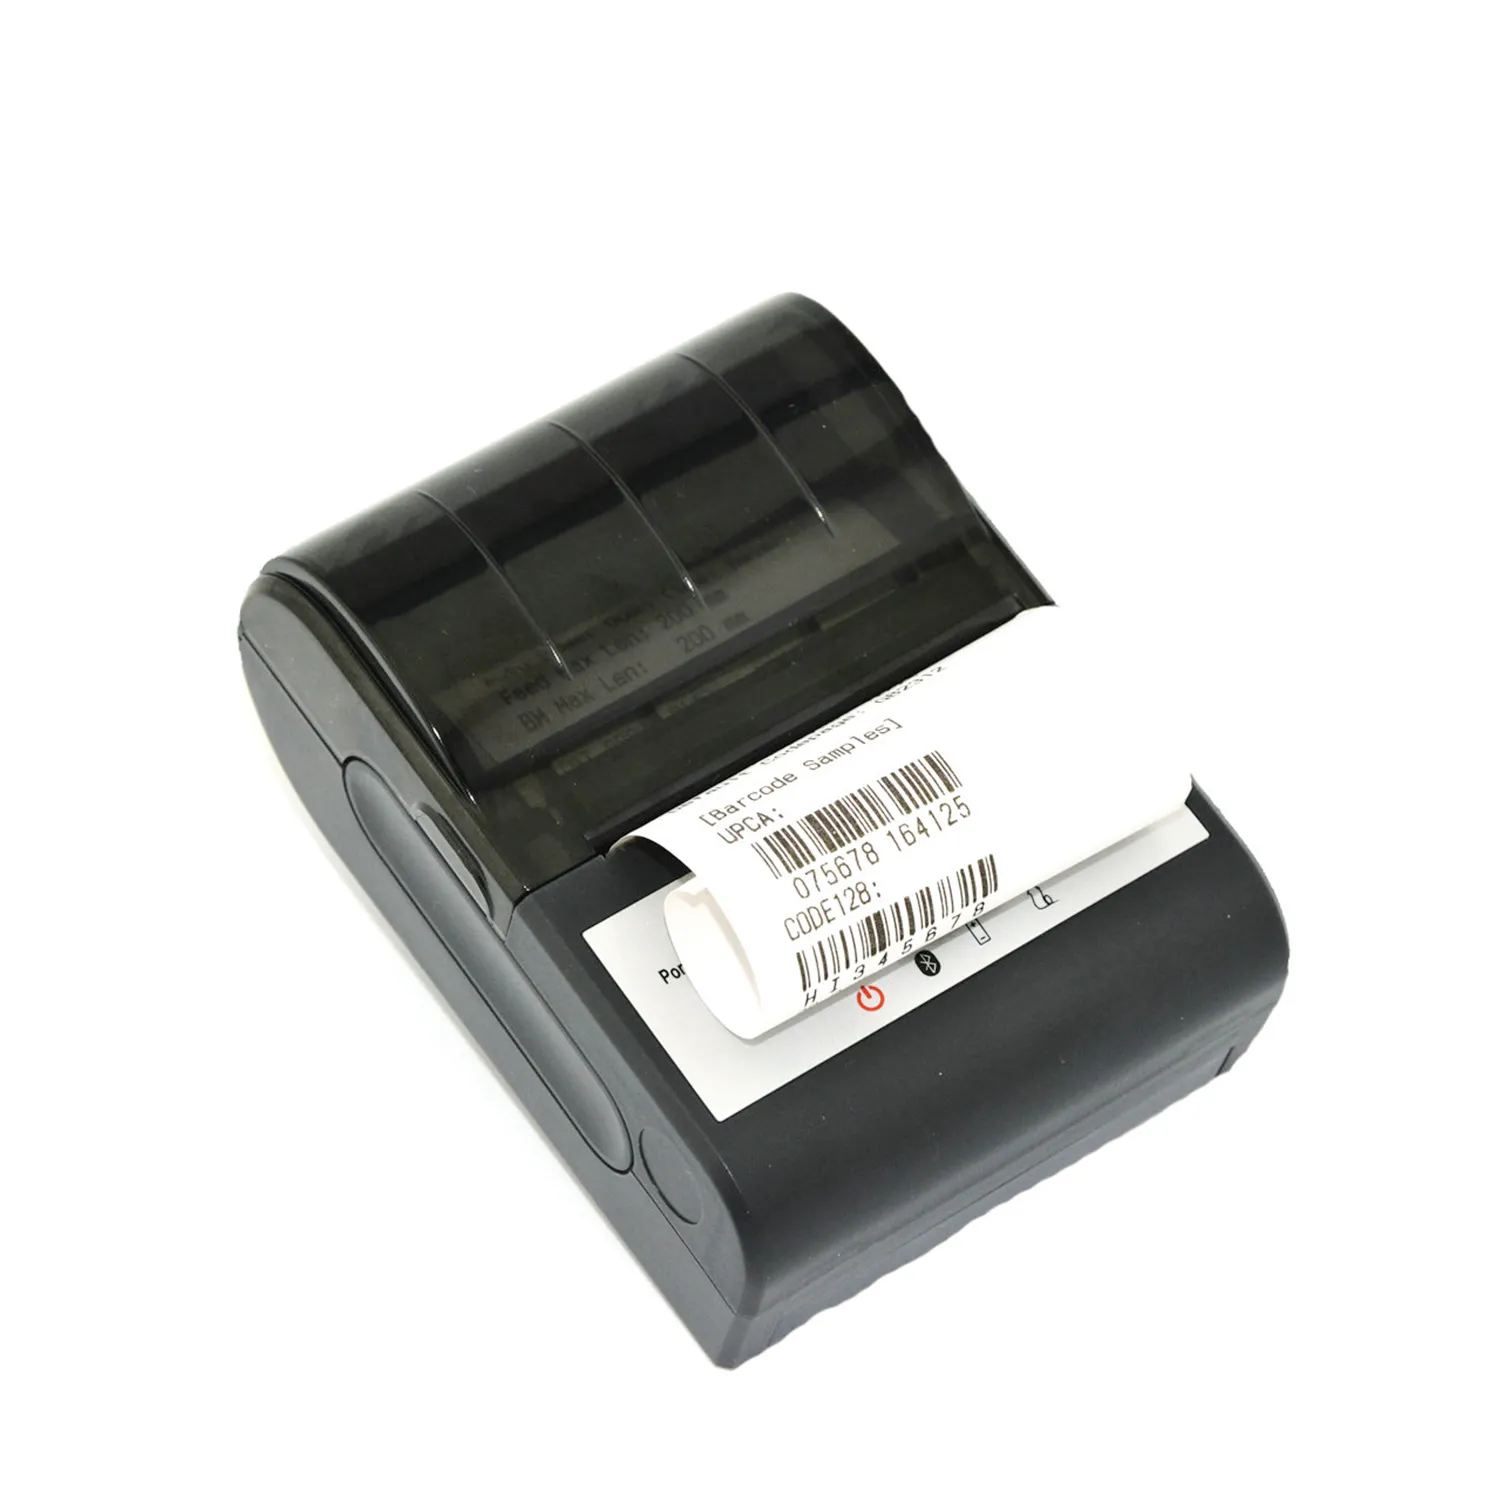 58mm Portable Bluetooth Printer Adroid Mobile Printer Mini Printer Free  with SDK + Belt Case